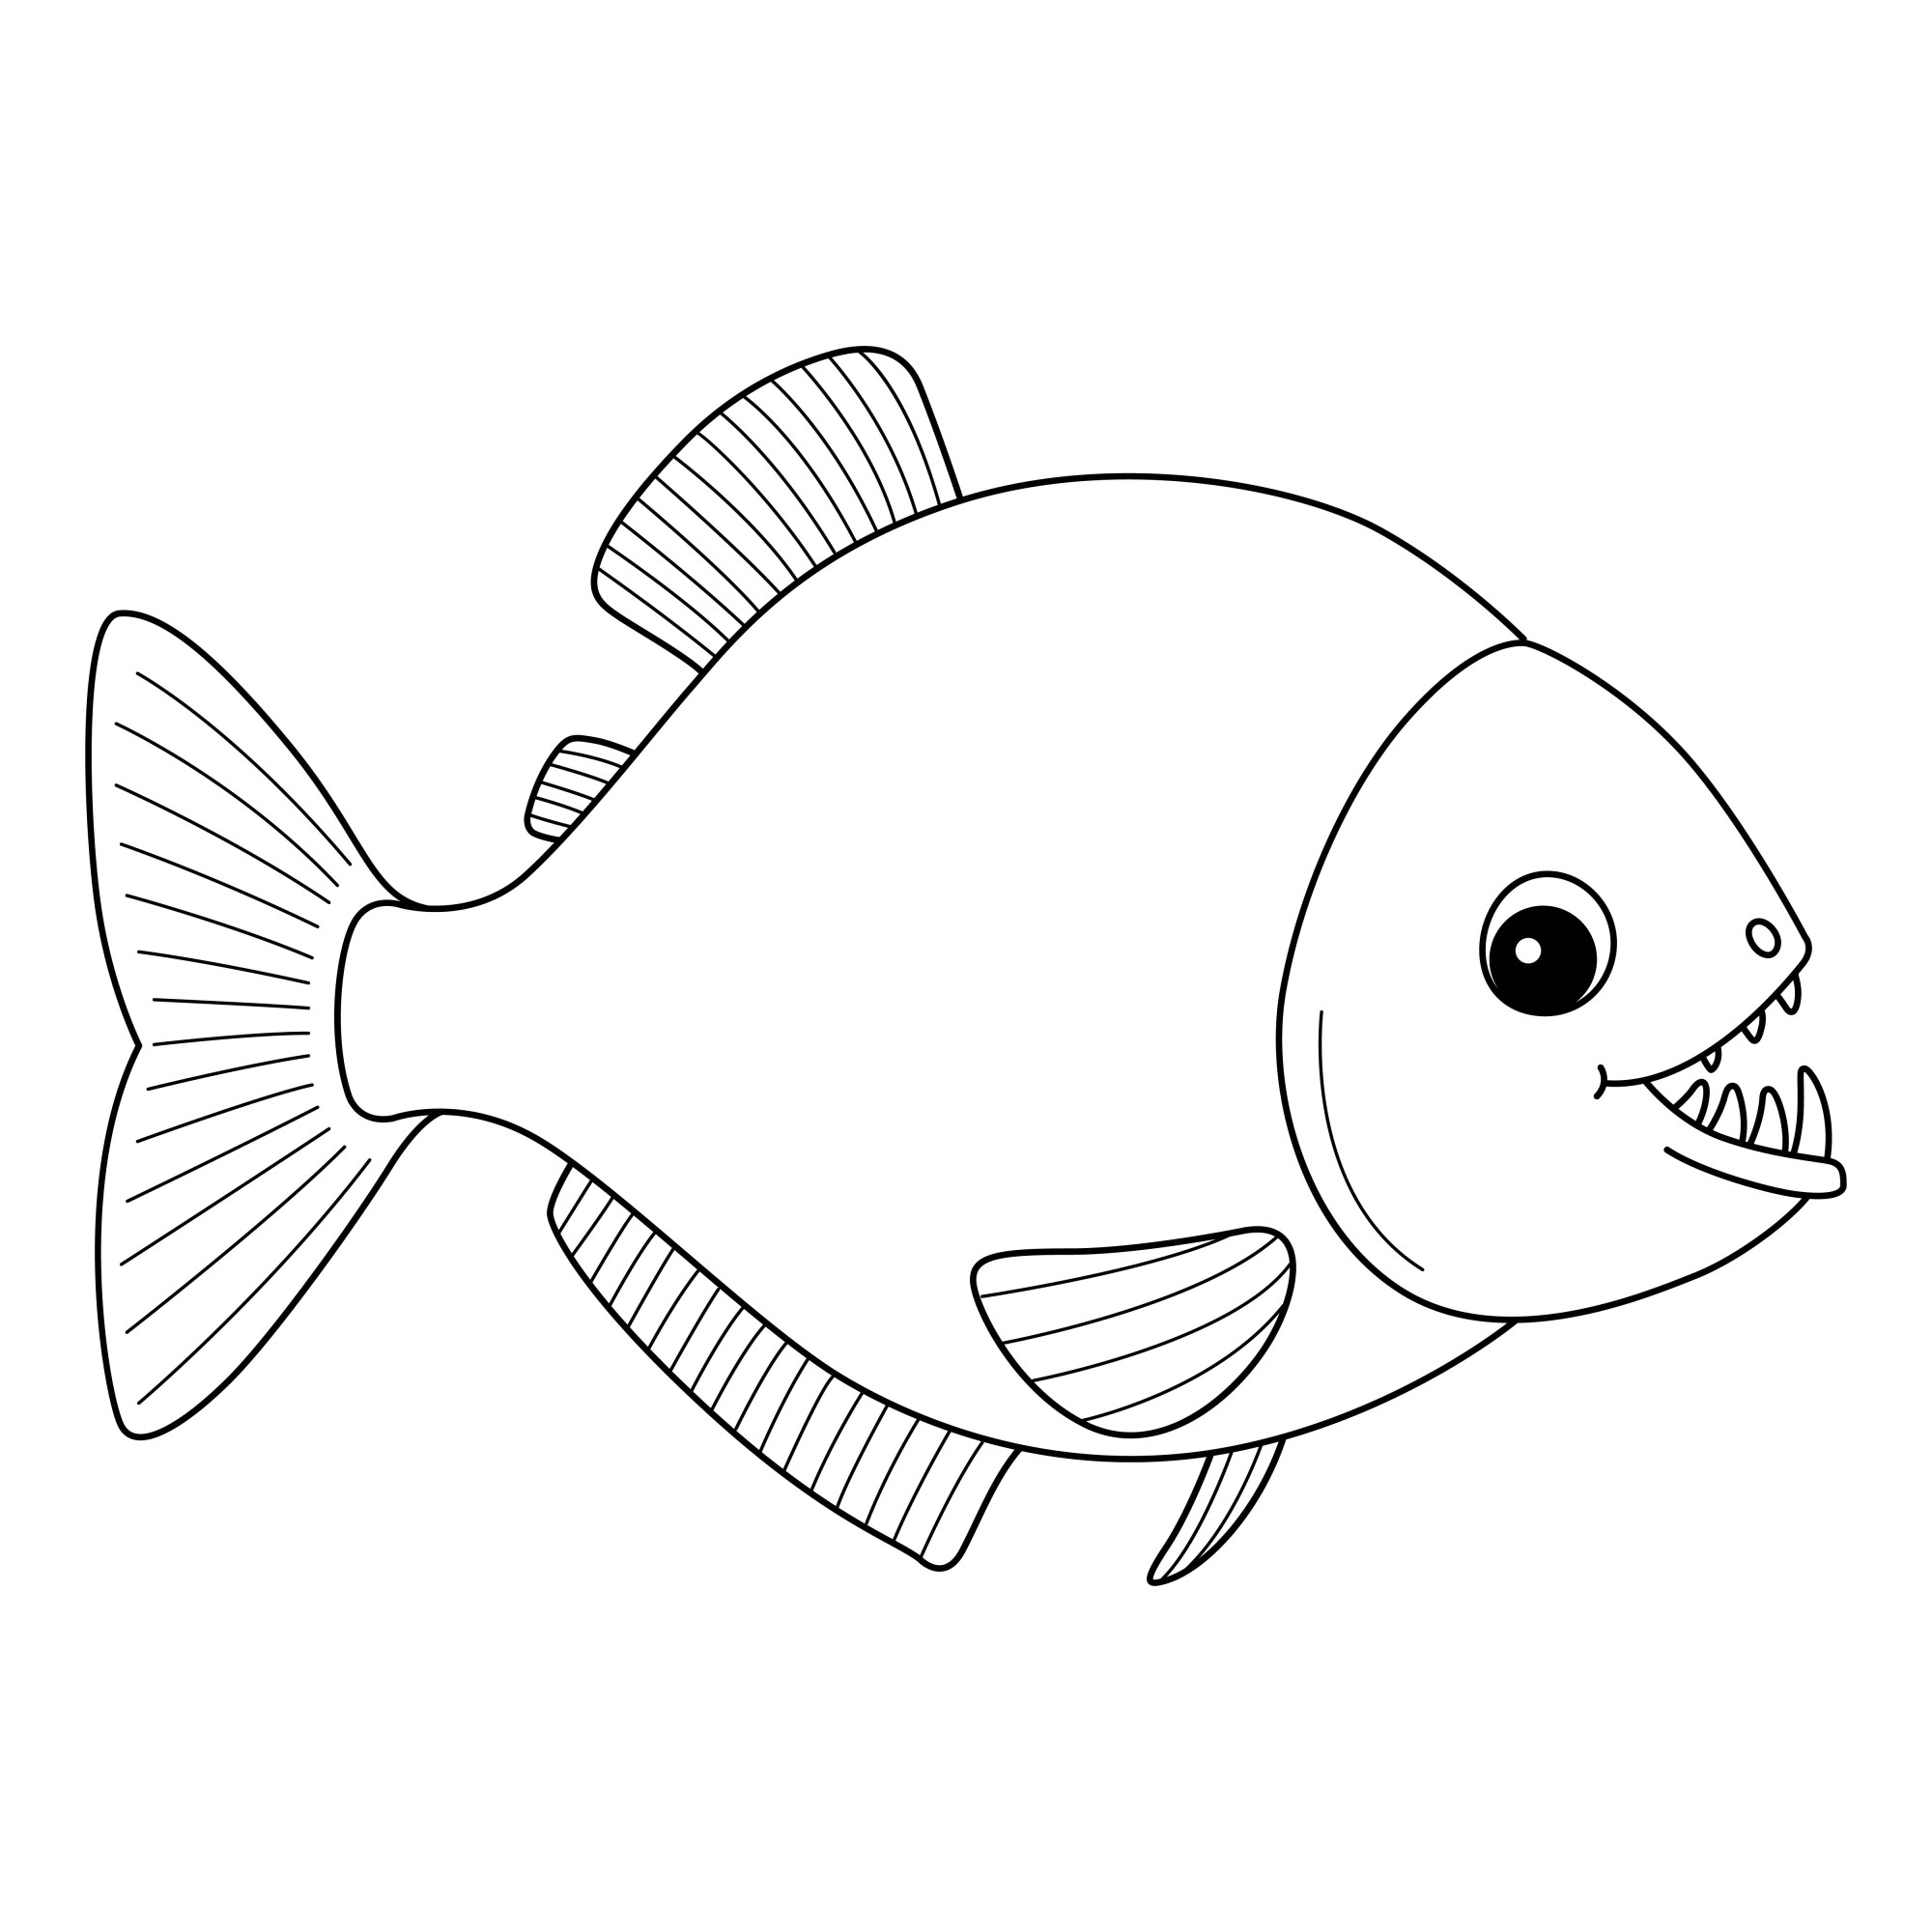 Раскраска для детей: рыба пиранья